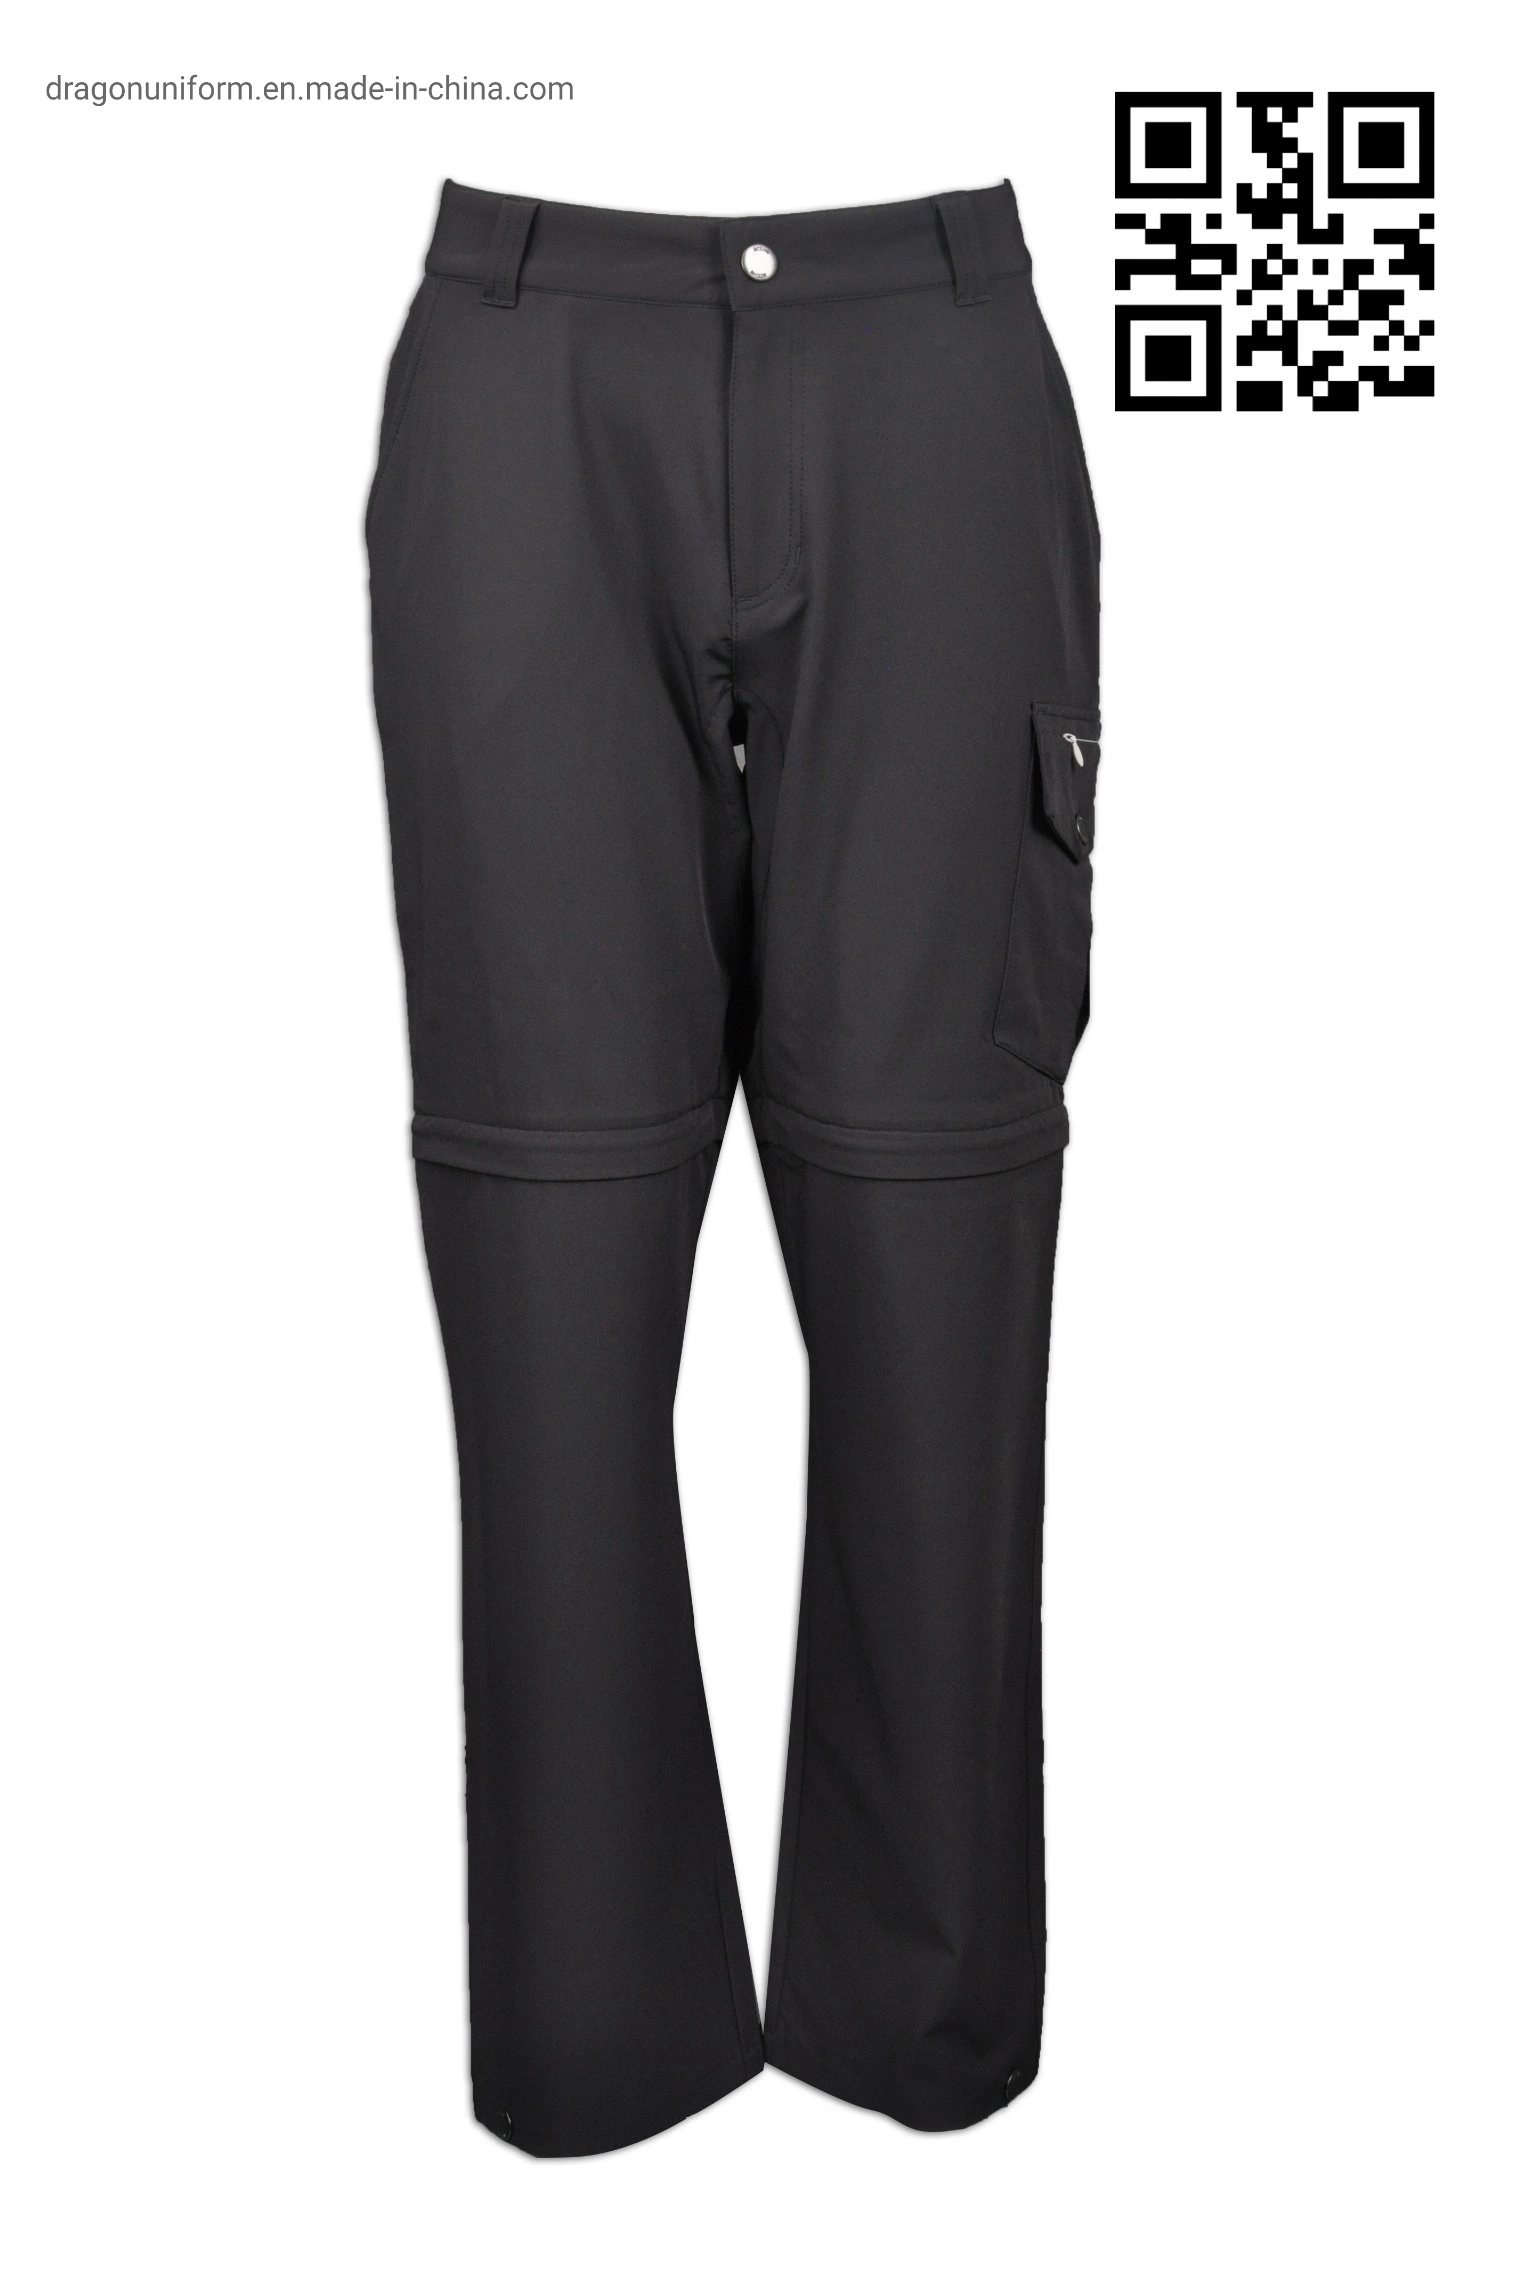 Multi Pocket Fashion Hip Pop Pants Trousers Streetwear Sweatpants Male Casual Fashion Cargo Pants